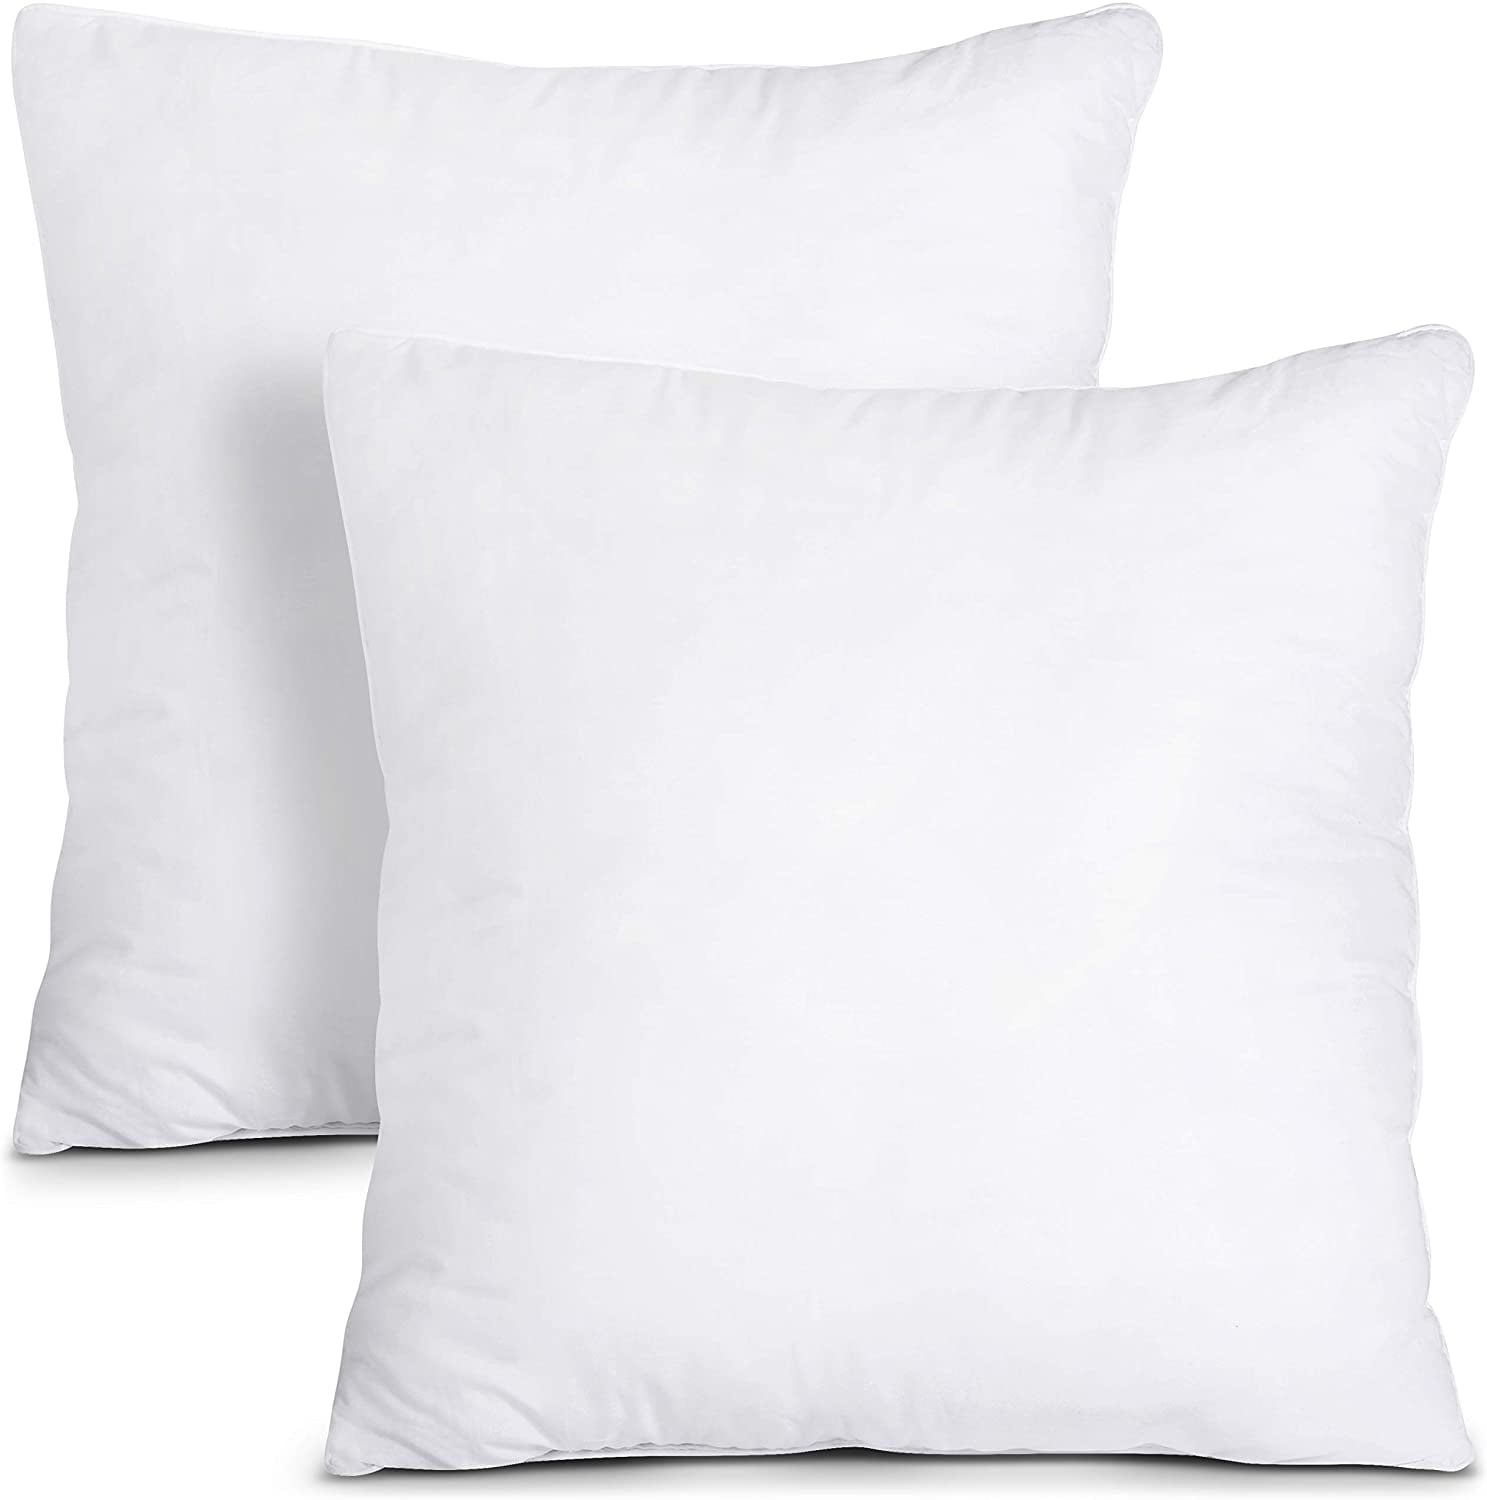 IZO All Supply Square Sham Stuffer Throw Pillow Insert 18 by 18 Inches White 